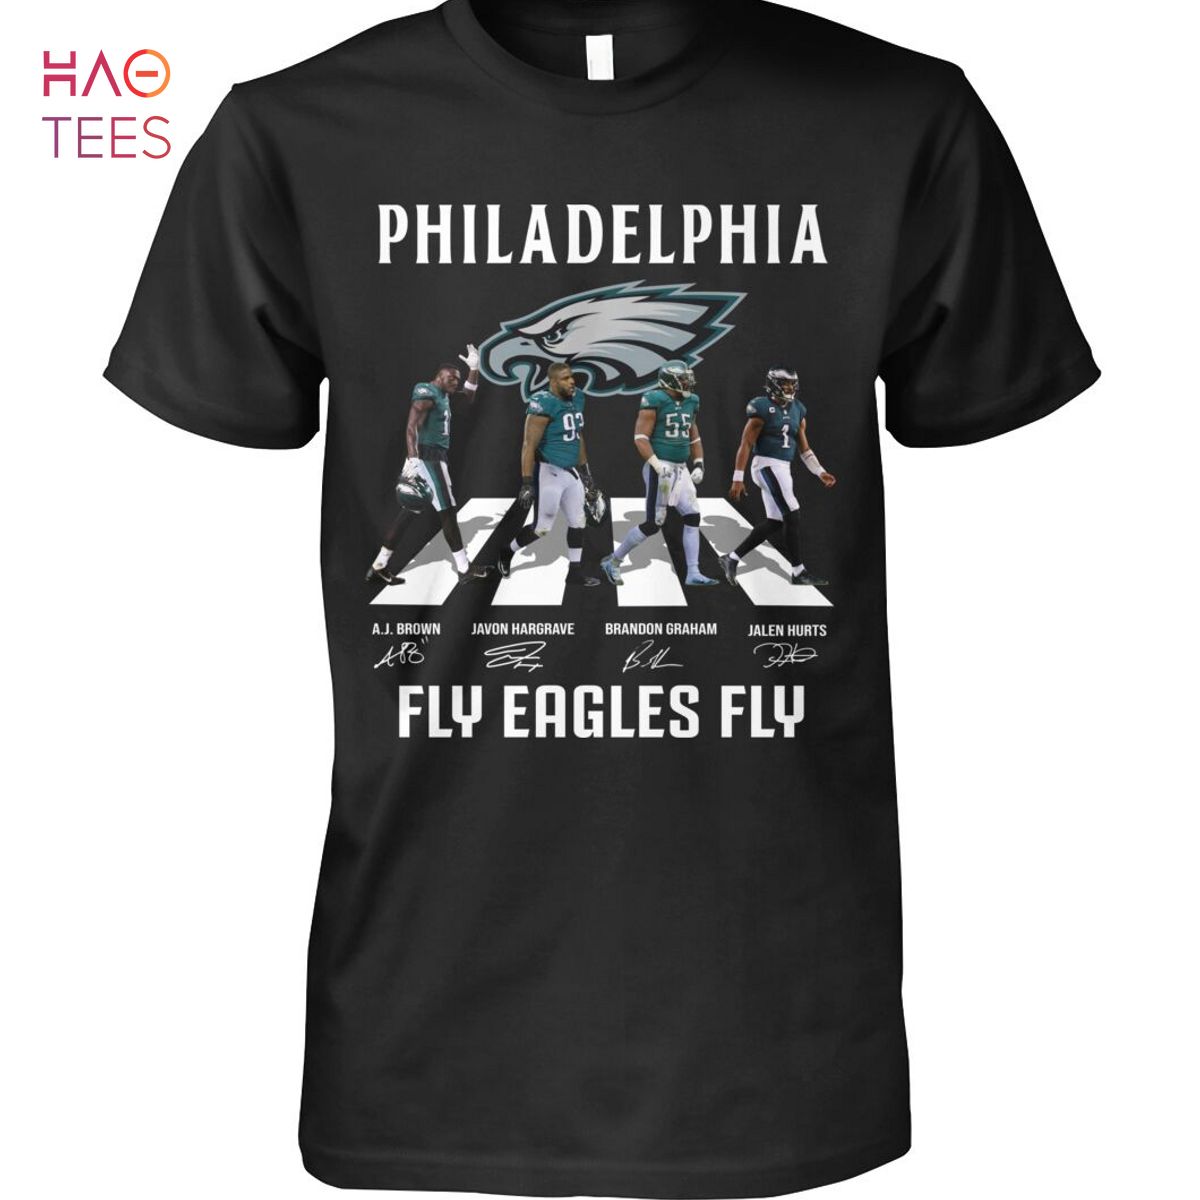 THE BEST Philadelphia Shirt Limited Edition